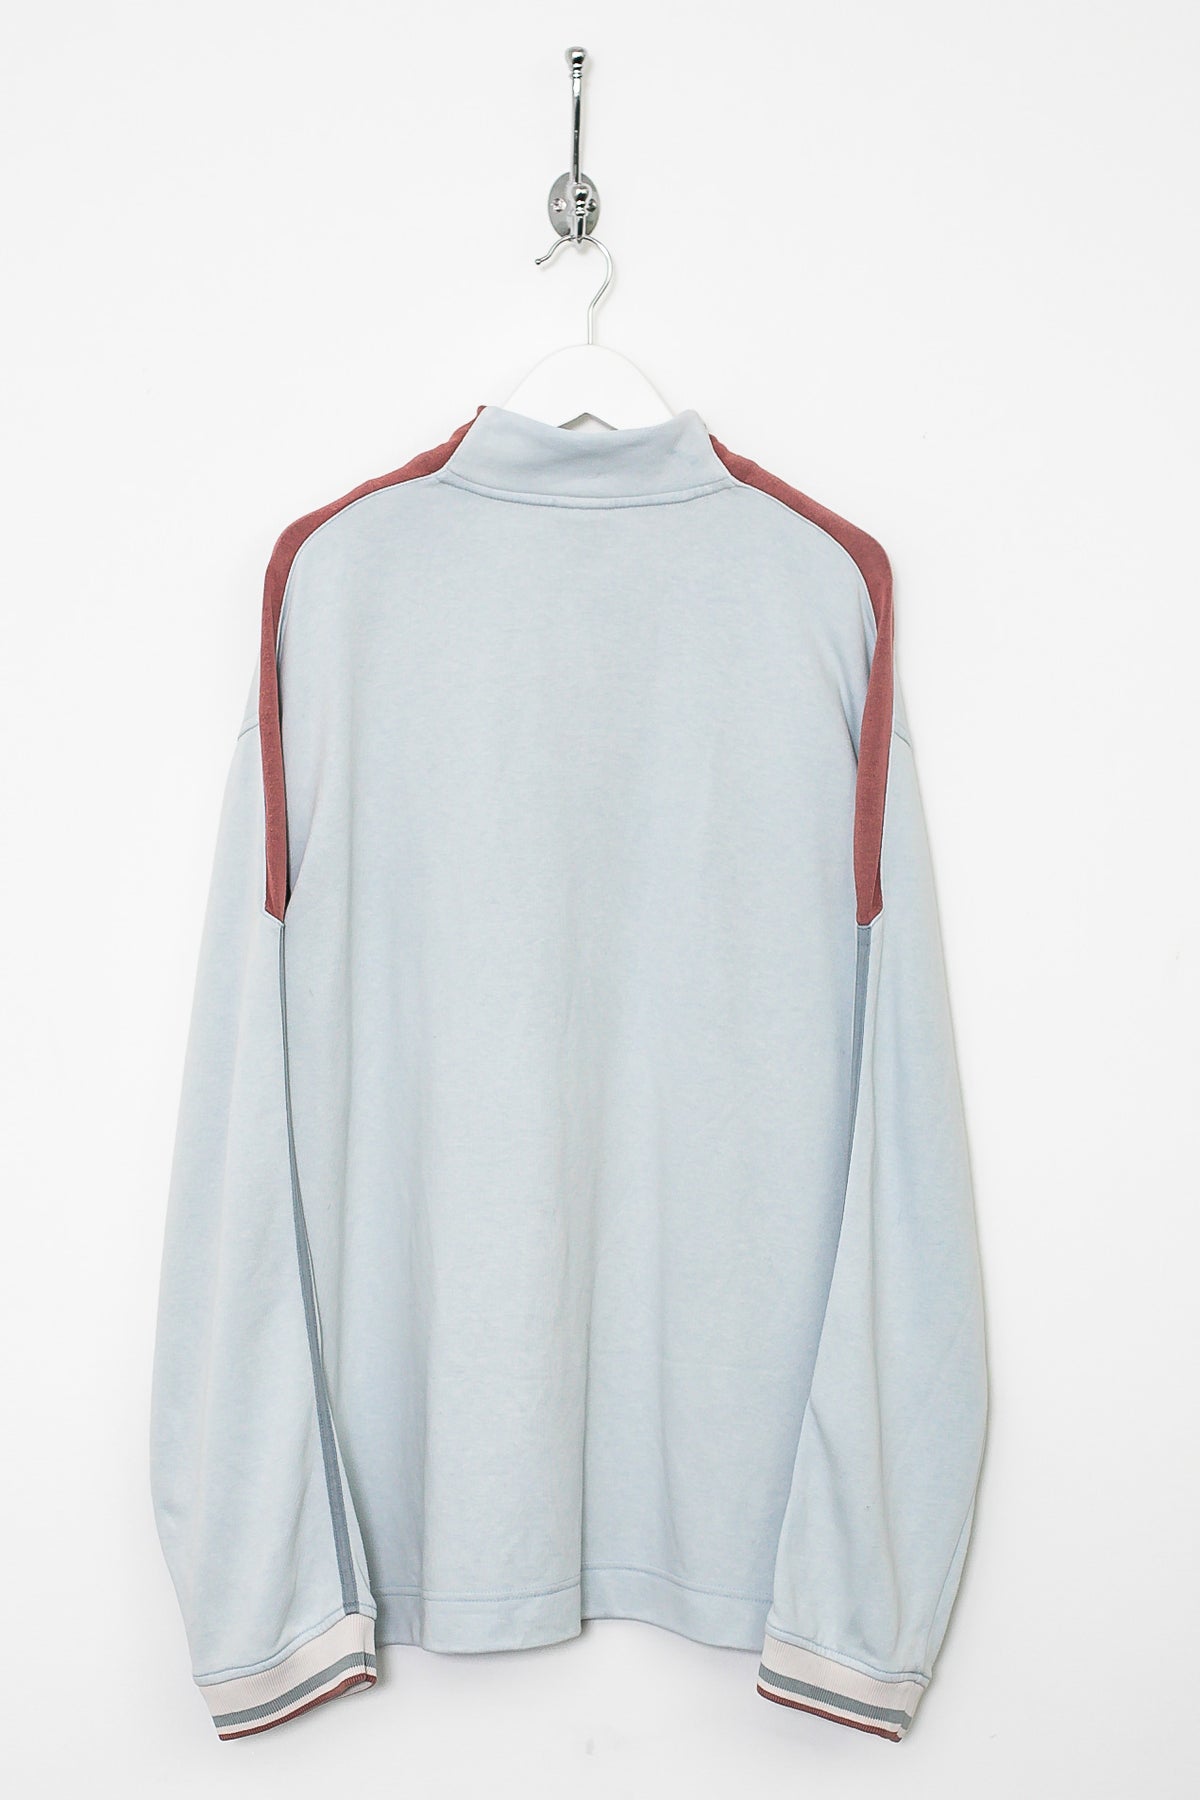 00s Nike 1/4 Zip Sweatshirt (XL)